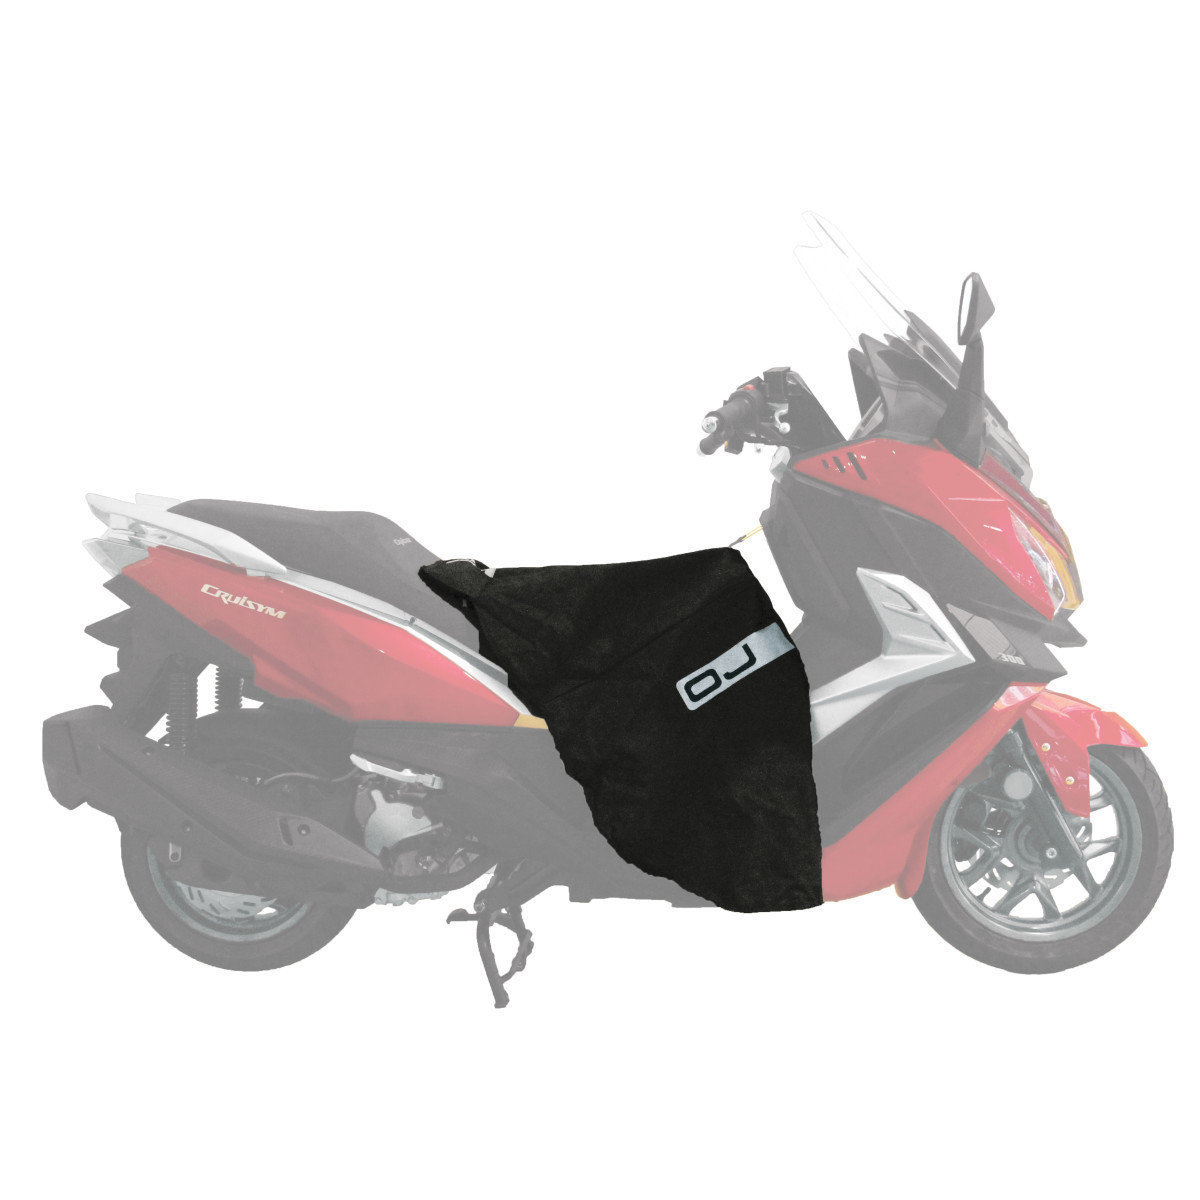 Capa para motociclos OJ Leg Maxi Fast Capa para motociclos